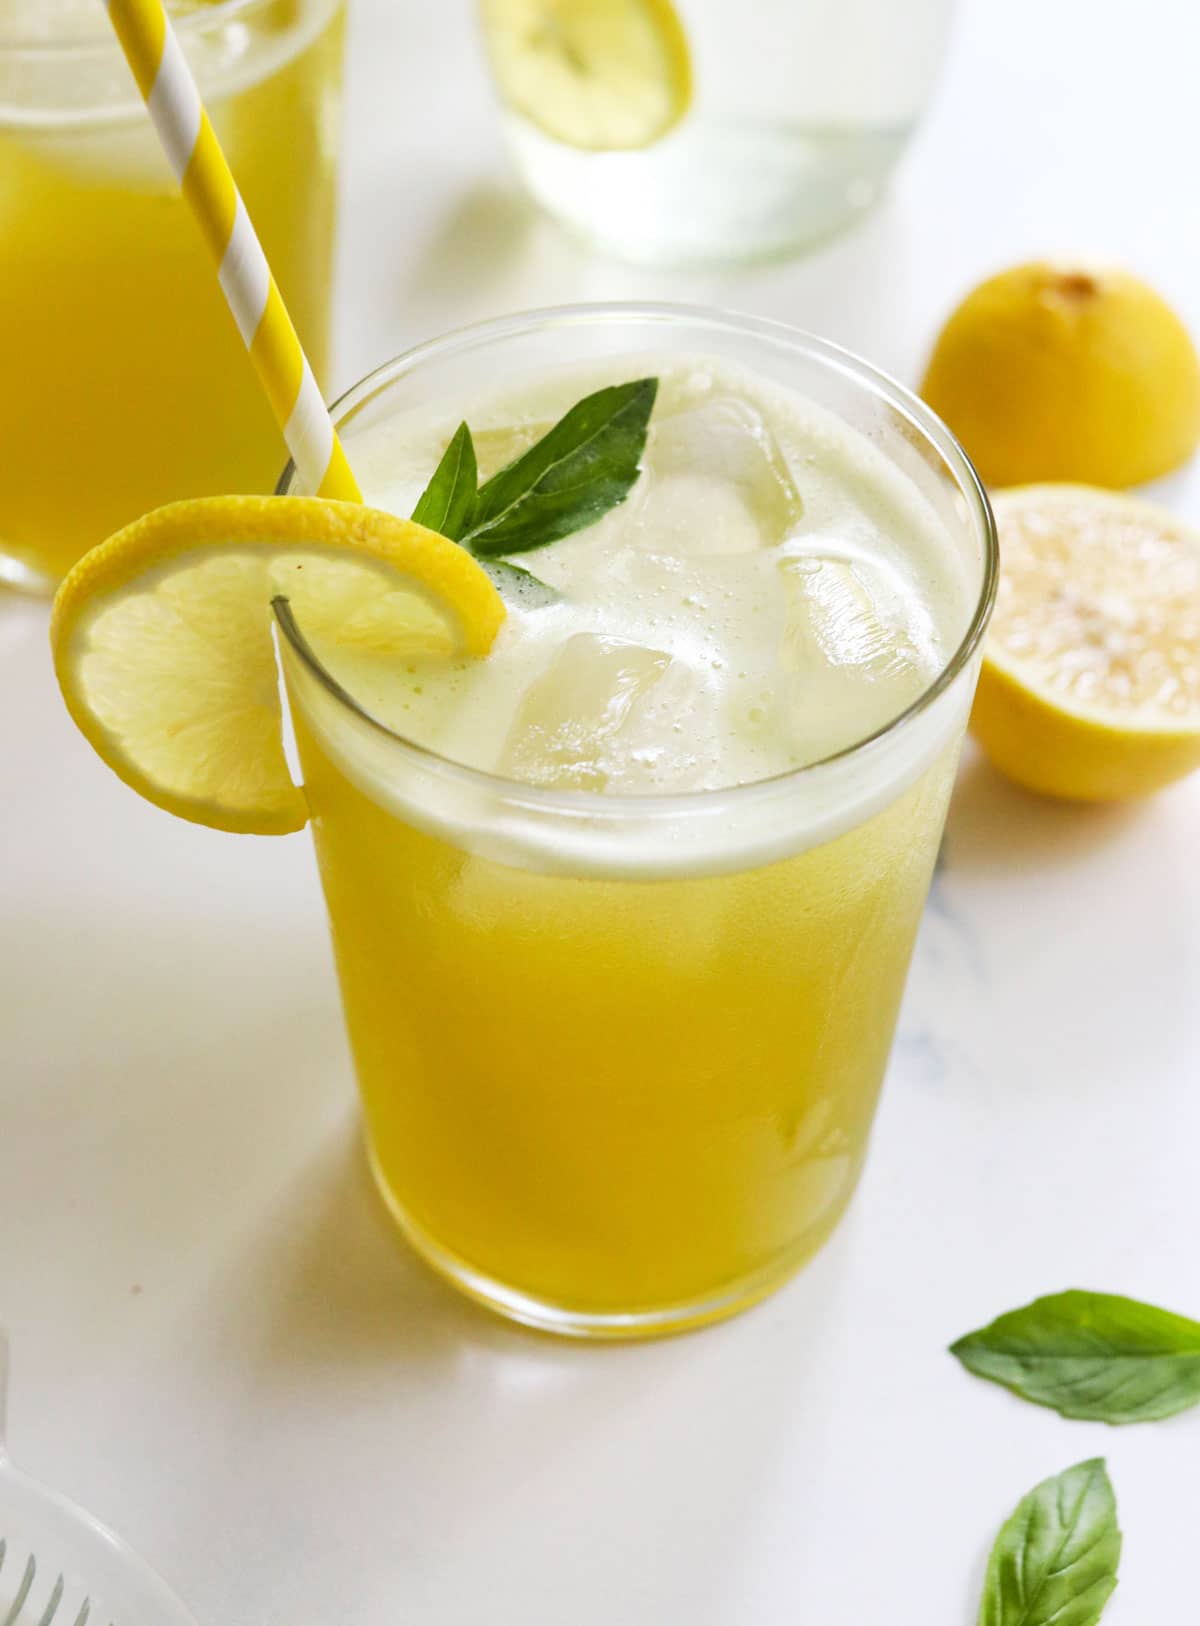 basil lemonade in glass with yellow straw